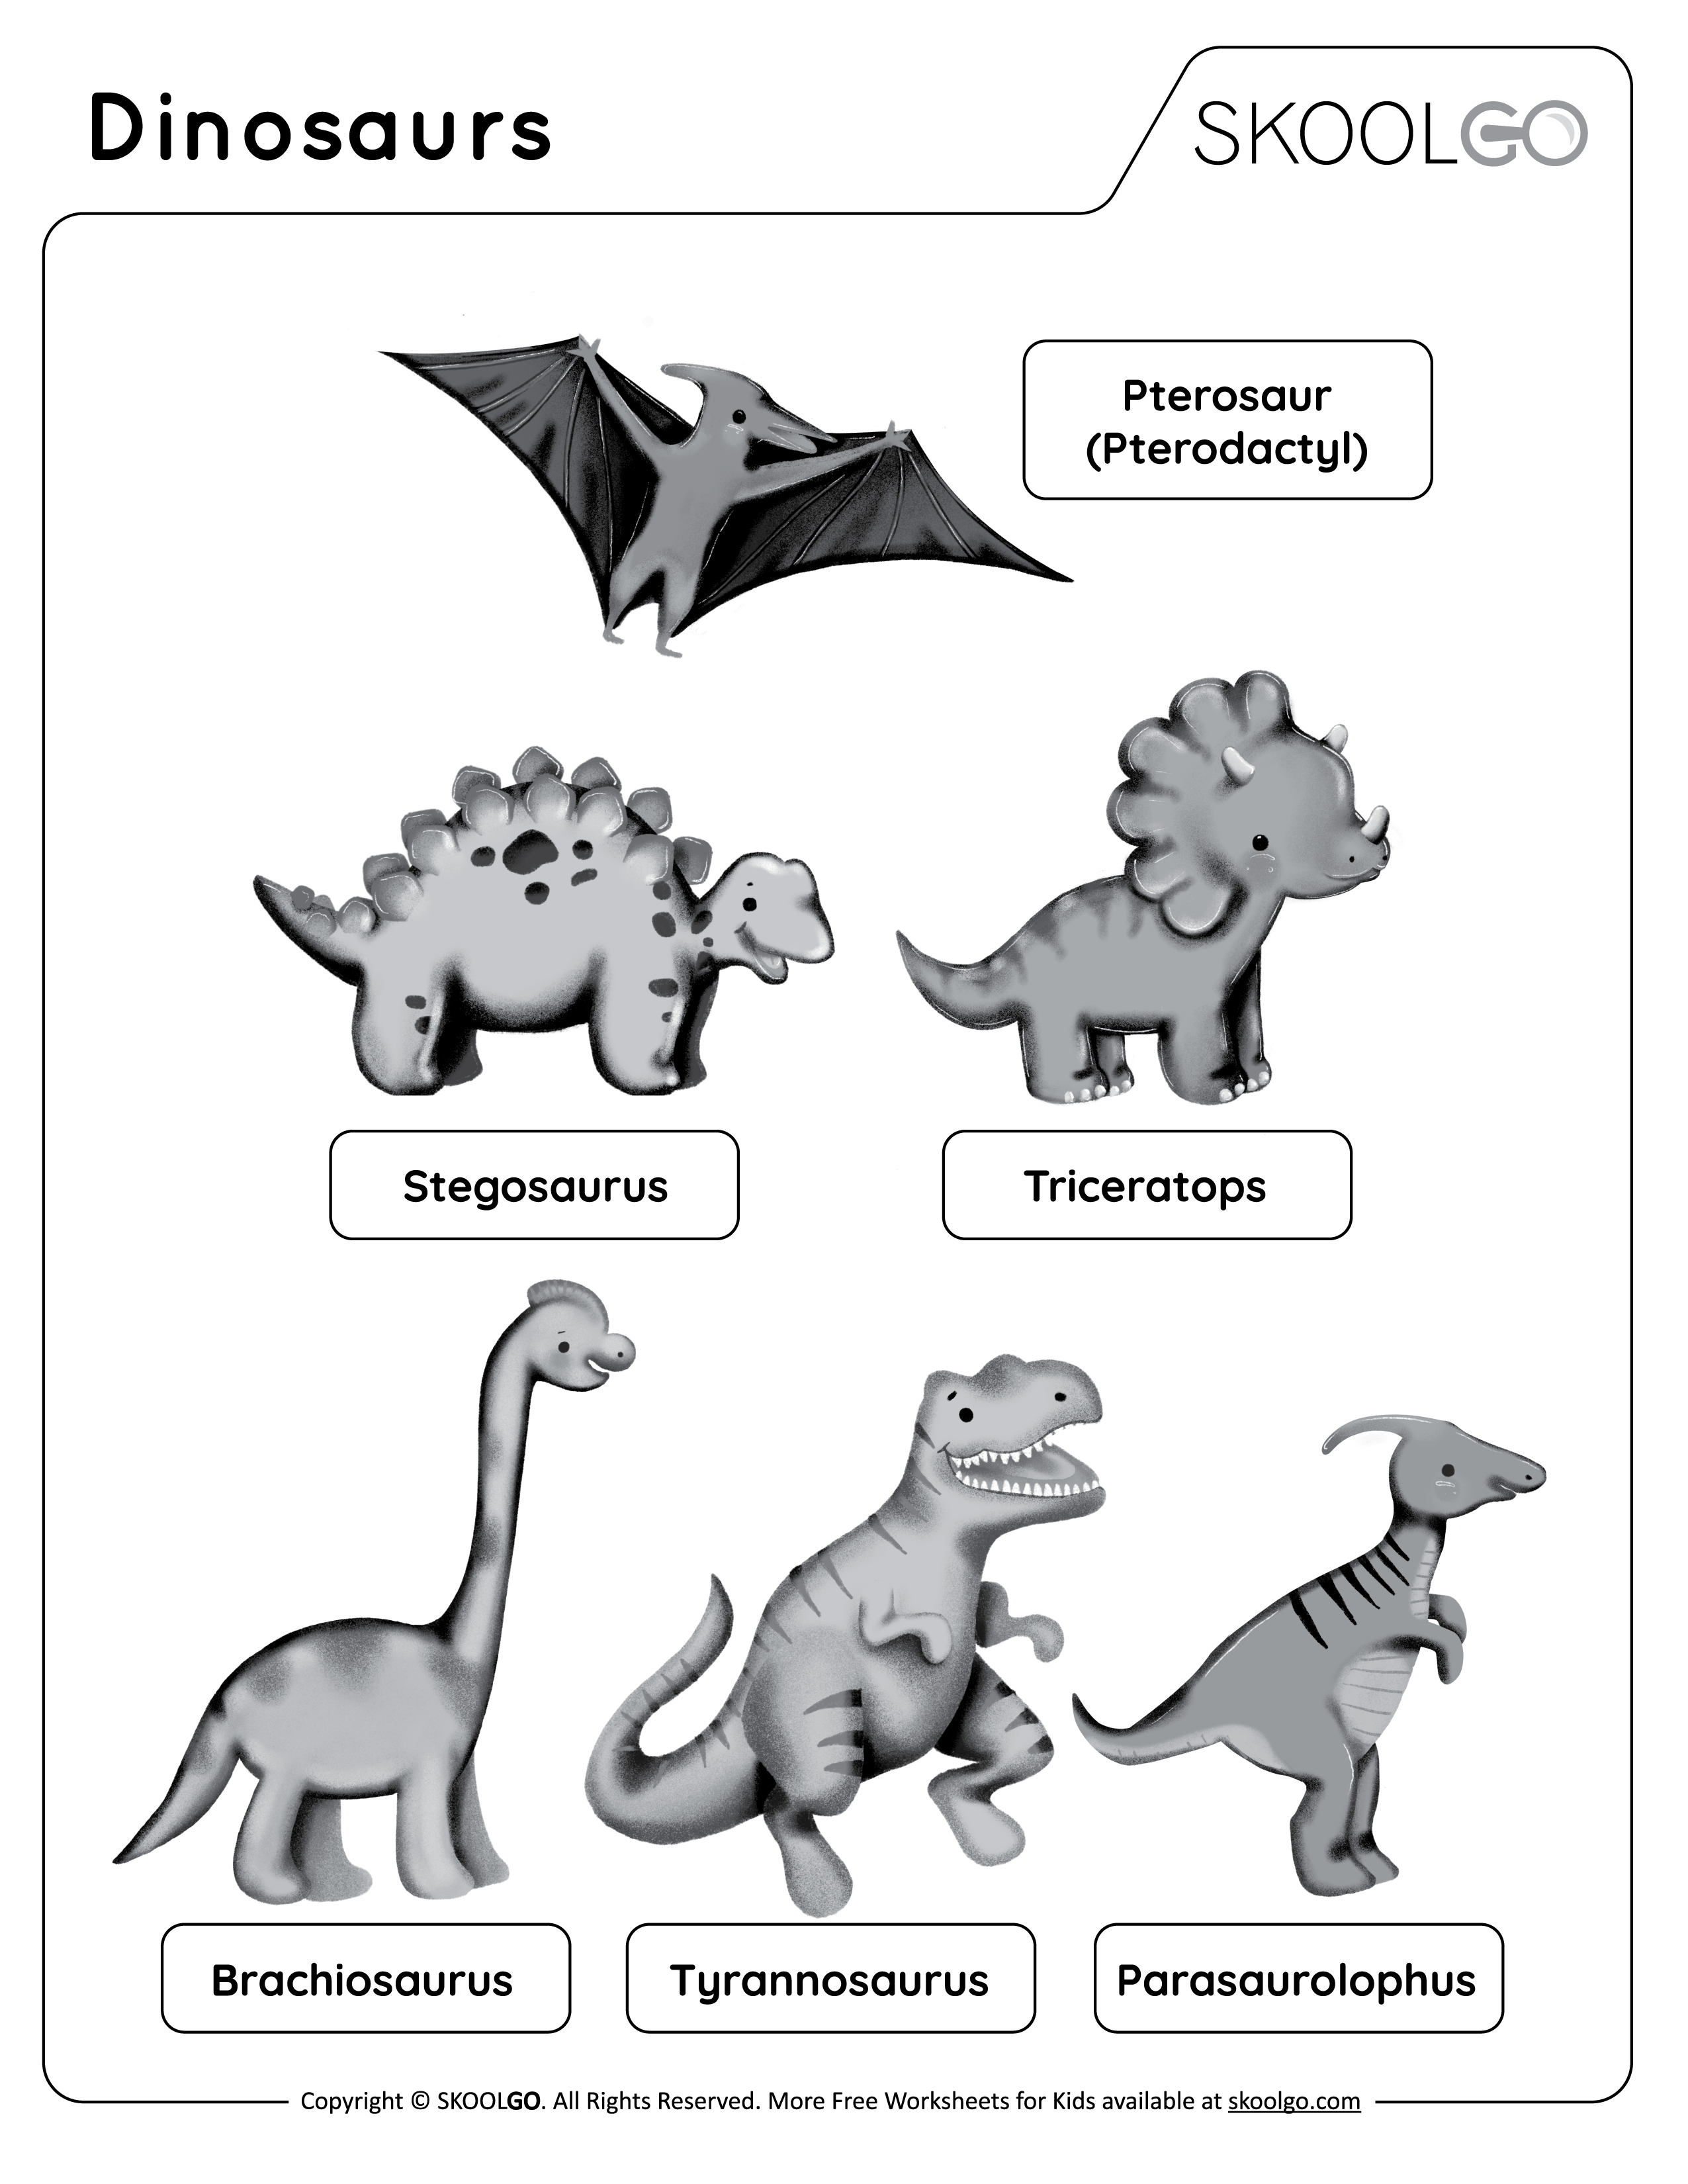 Dinosaurs - Free Black and White Worksheet for Kids